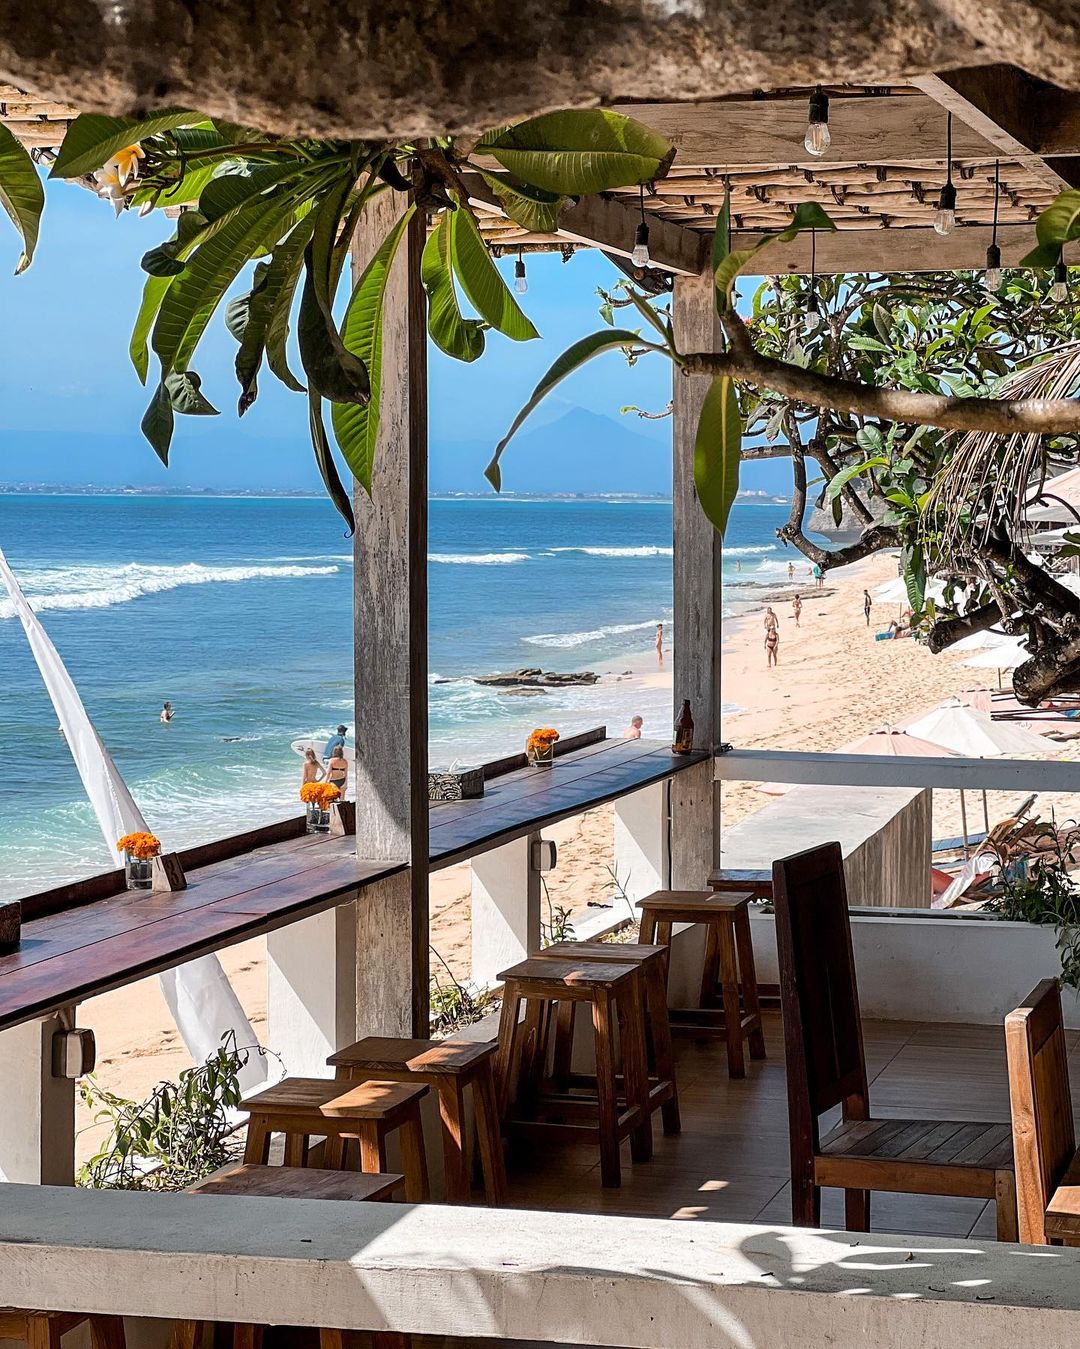 Jam Buka Jimmy Beach Cafe Bali Image From @bali_island_guide